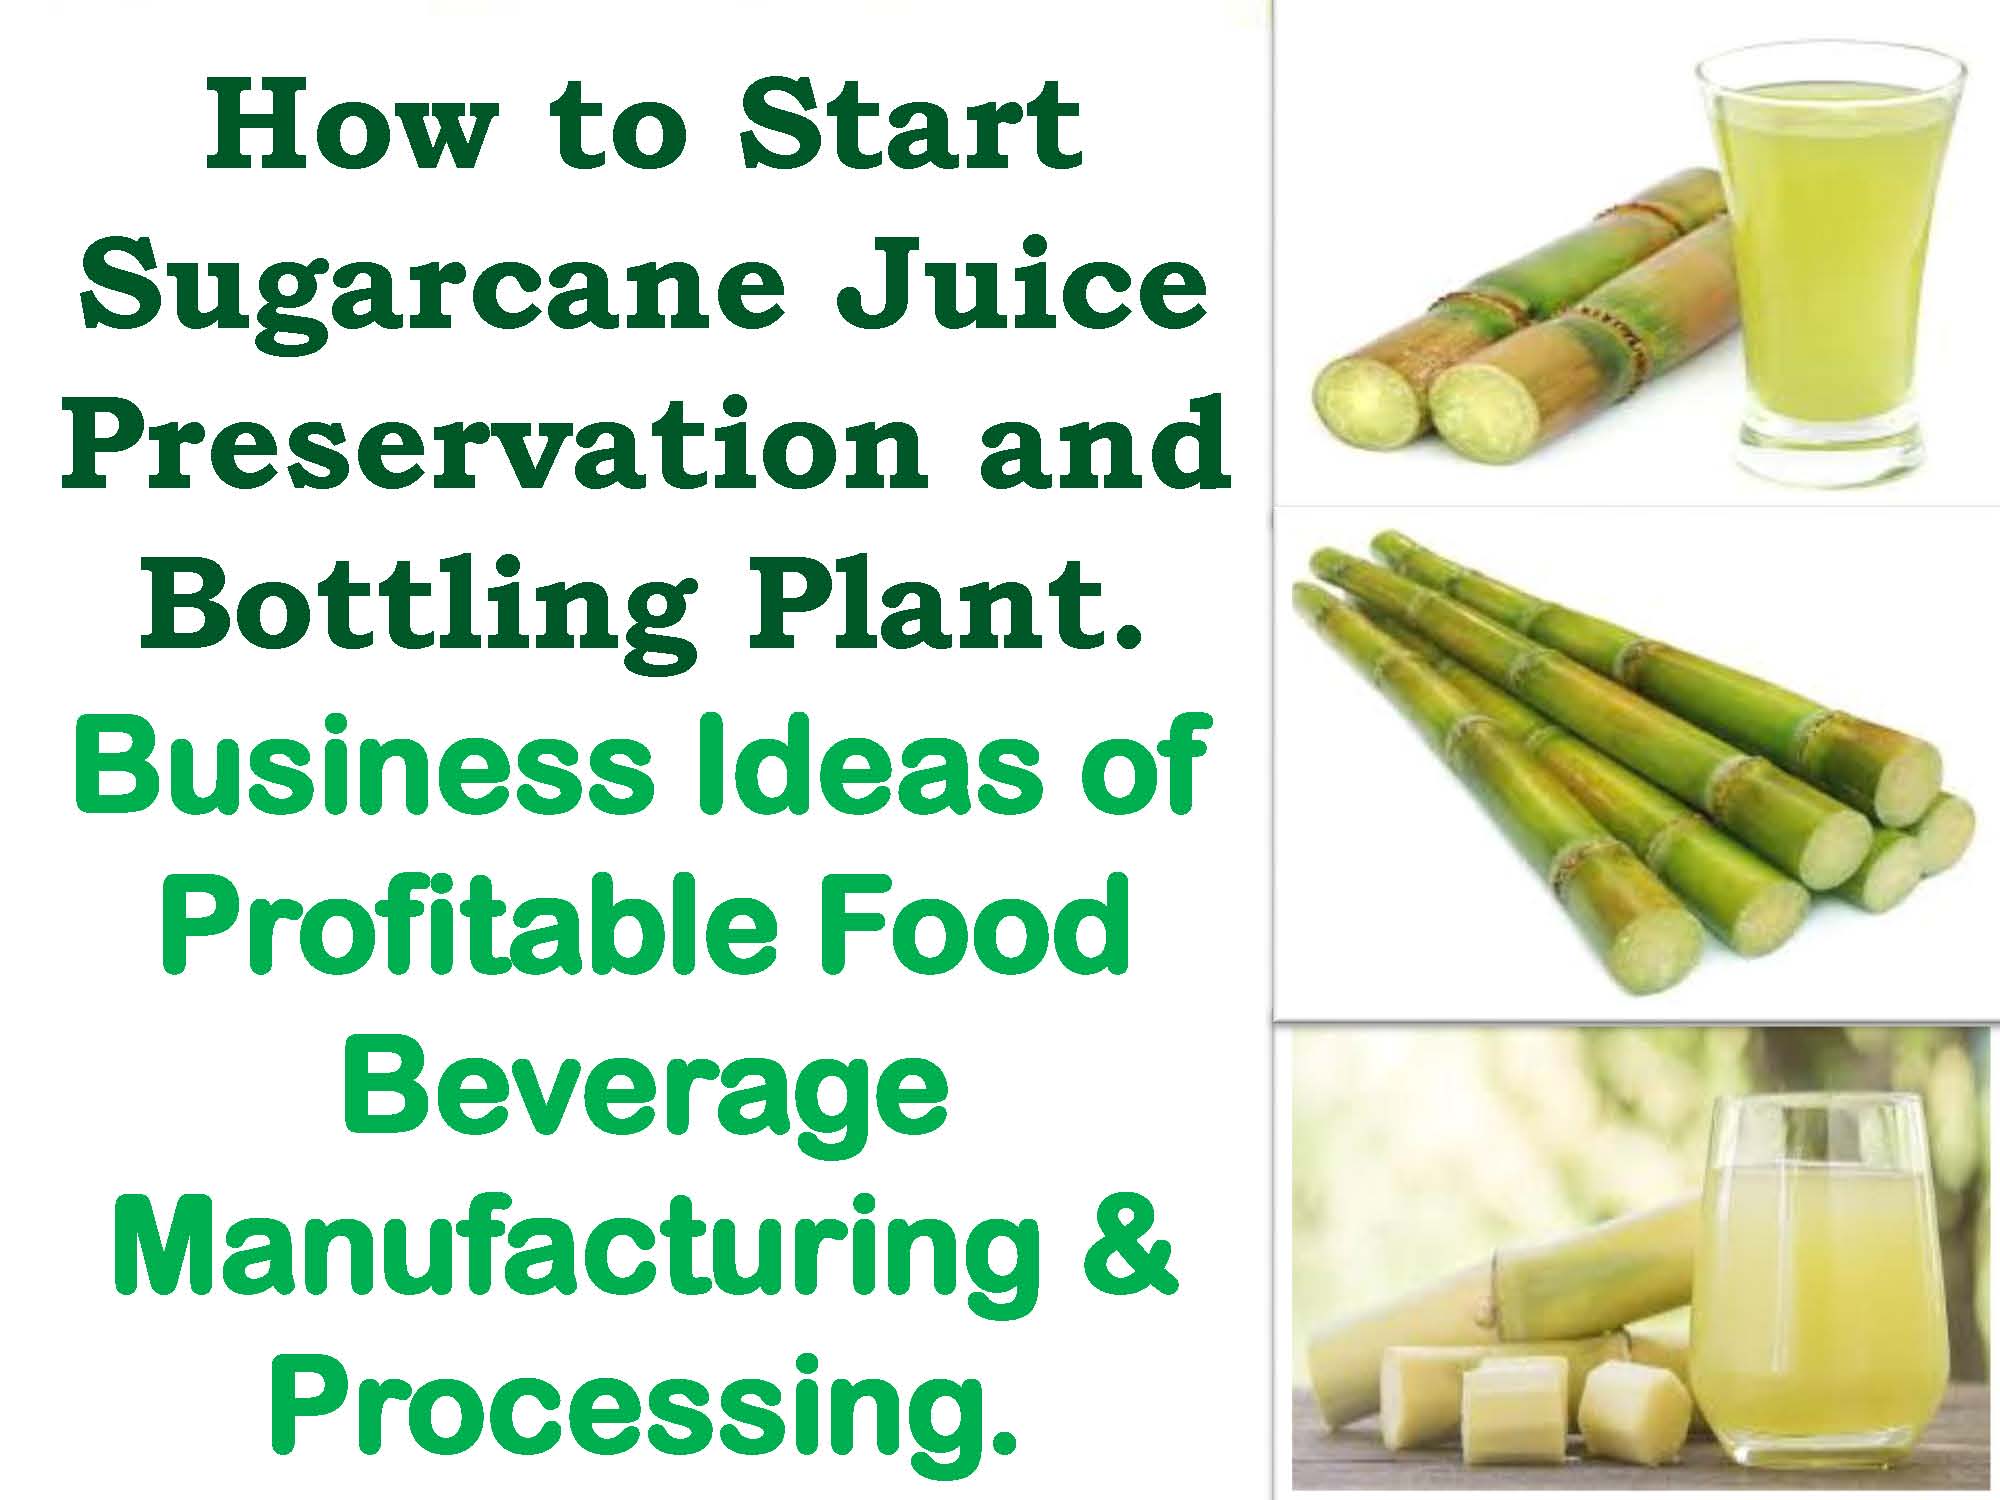 How to Start Sugarcane Juice Preservation and Bottling Plant